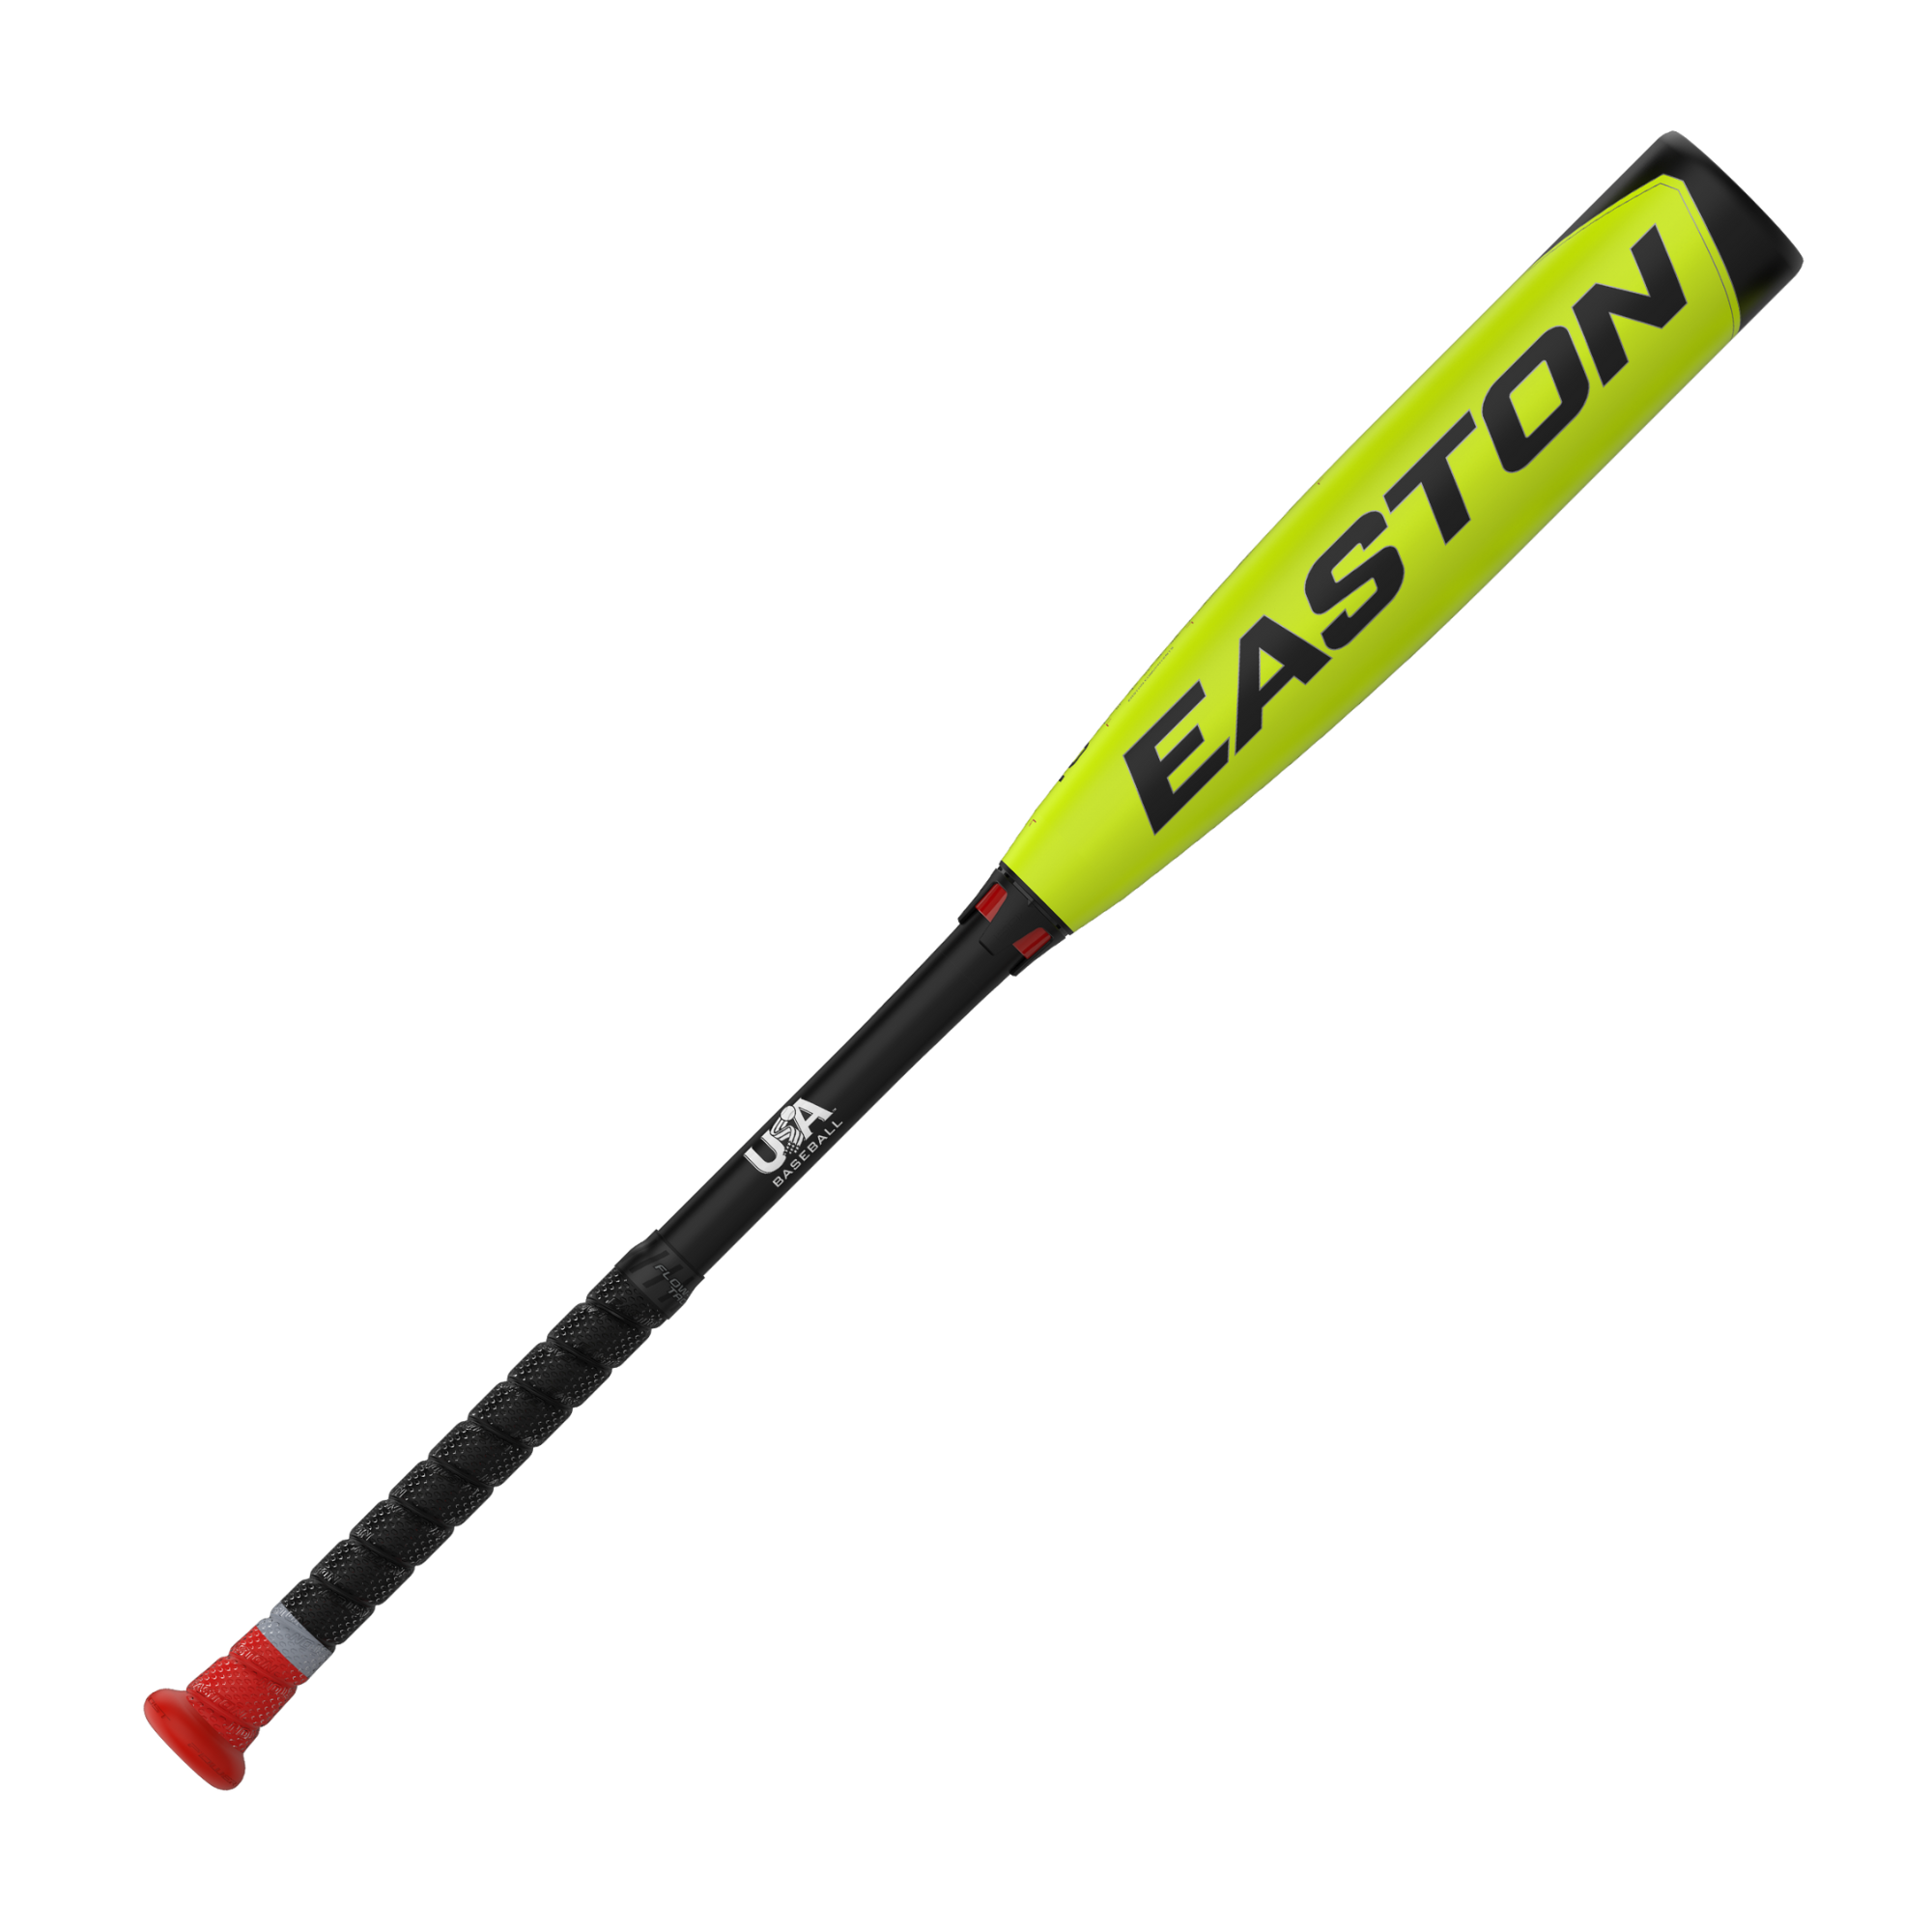 Easton ADV 360 -11 (2 5/8" Barrel) USA Youth Baseball Bat